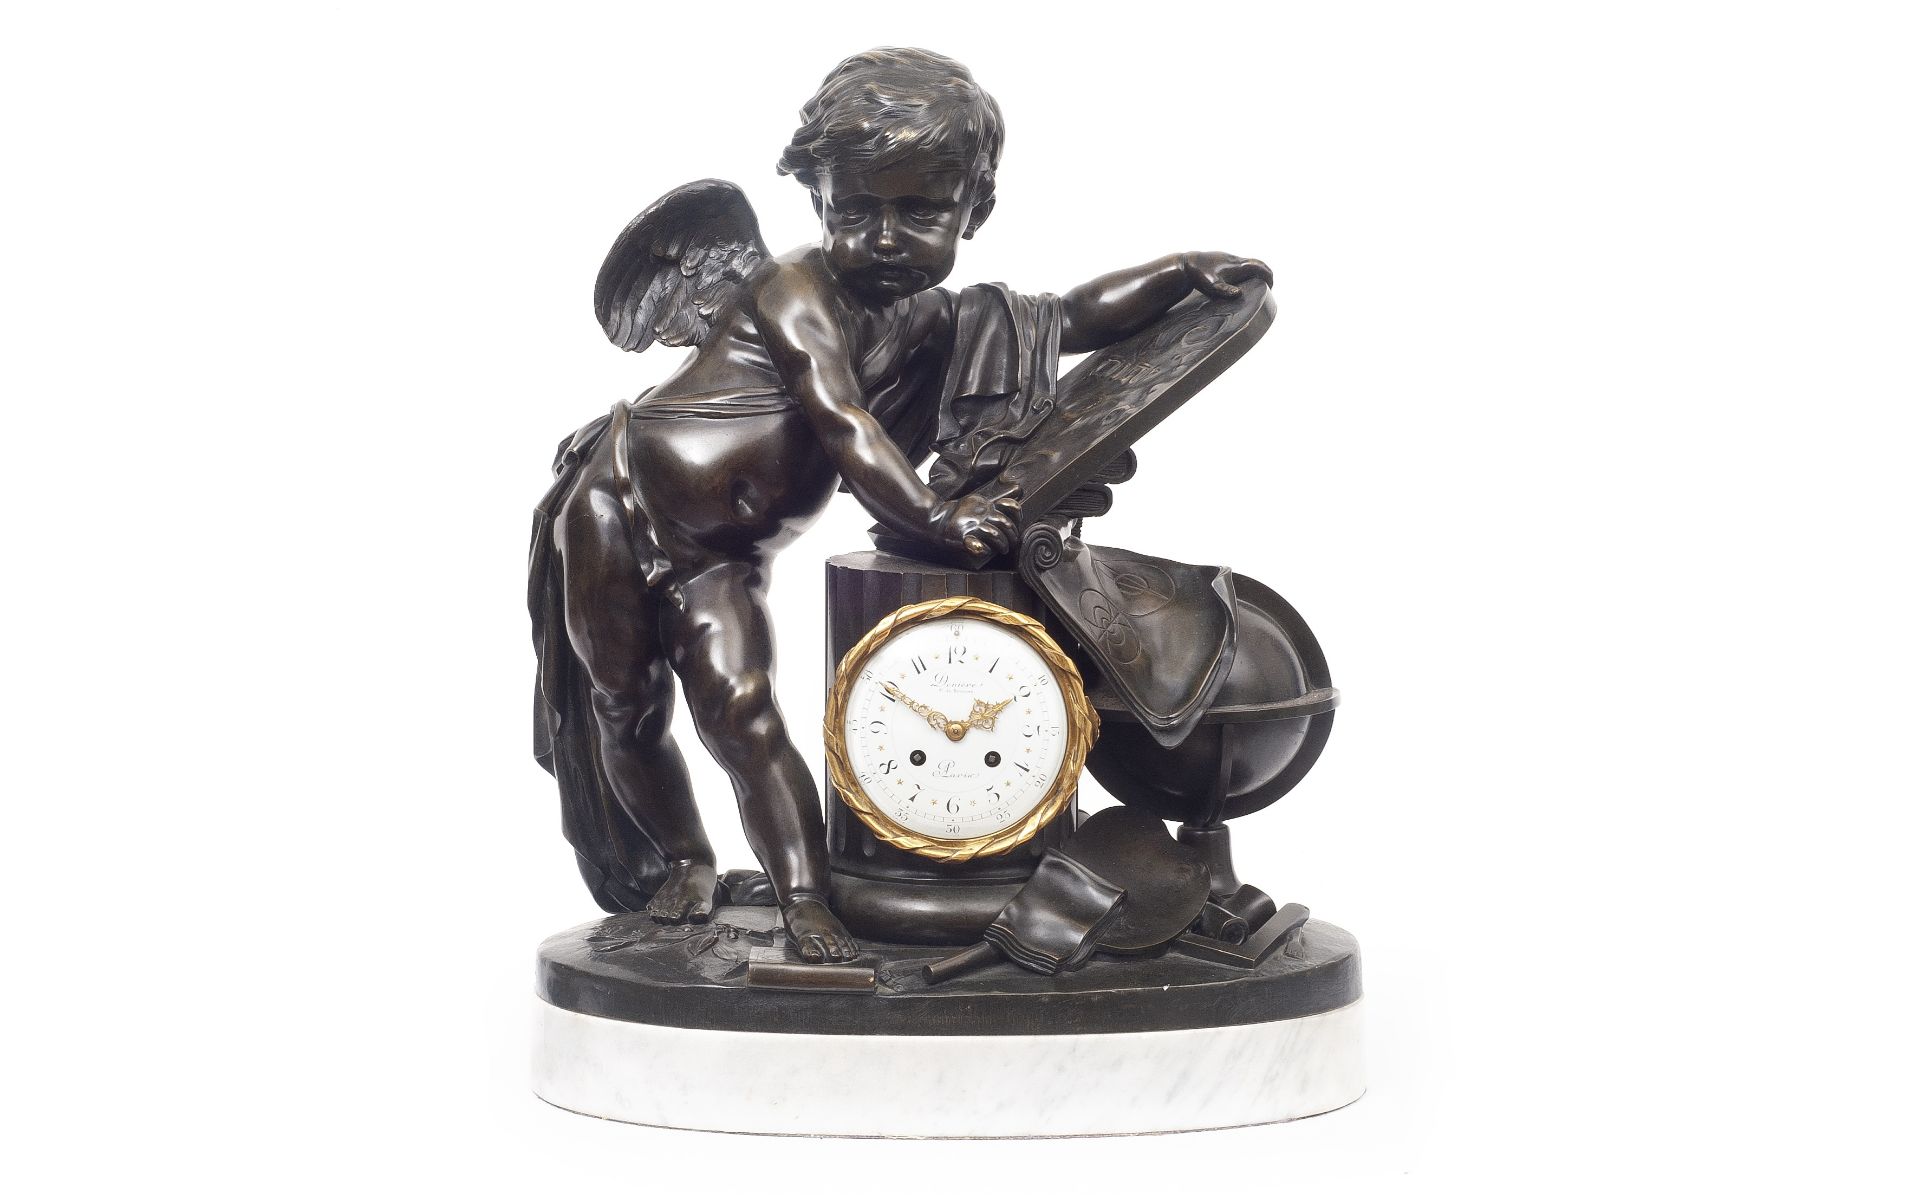 A FINE AND LARGE 19TH CENTURY BRONZE FIGURAL CLOCK SIGNED DENIERE, PARIS, CIRCA 1870